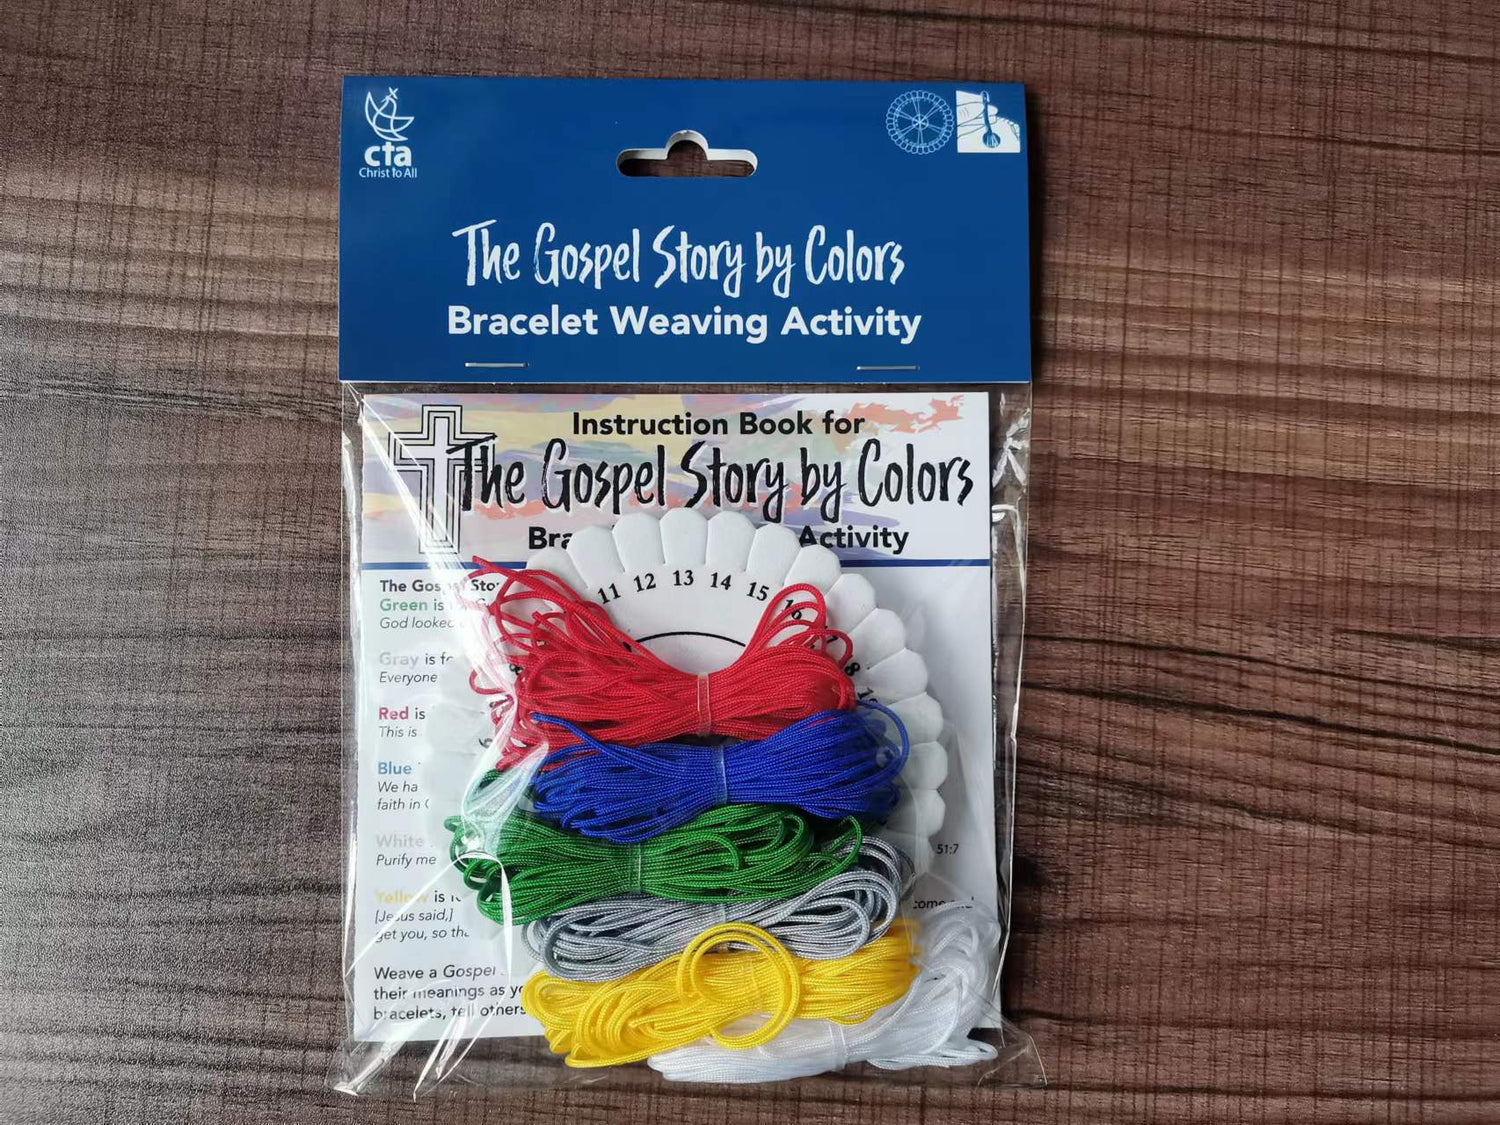 Gospel Story by Colors Bracelet Weaving Kit shown packaged